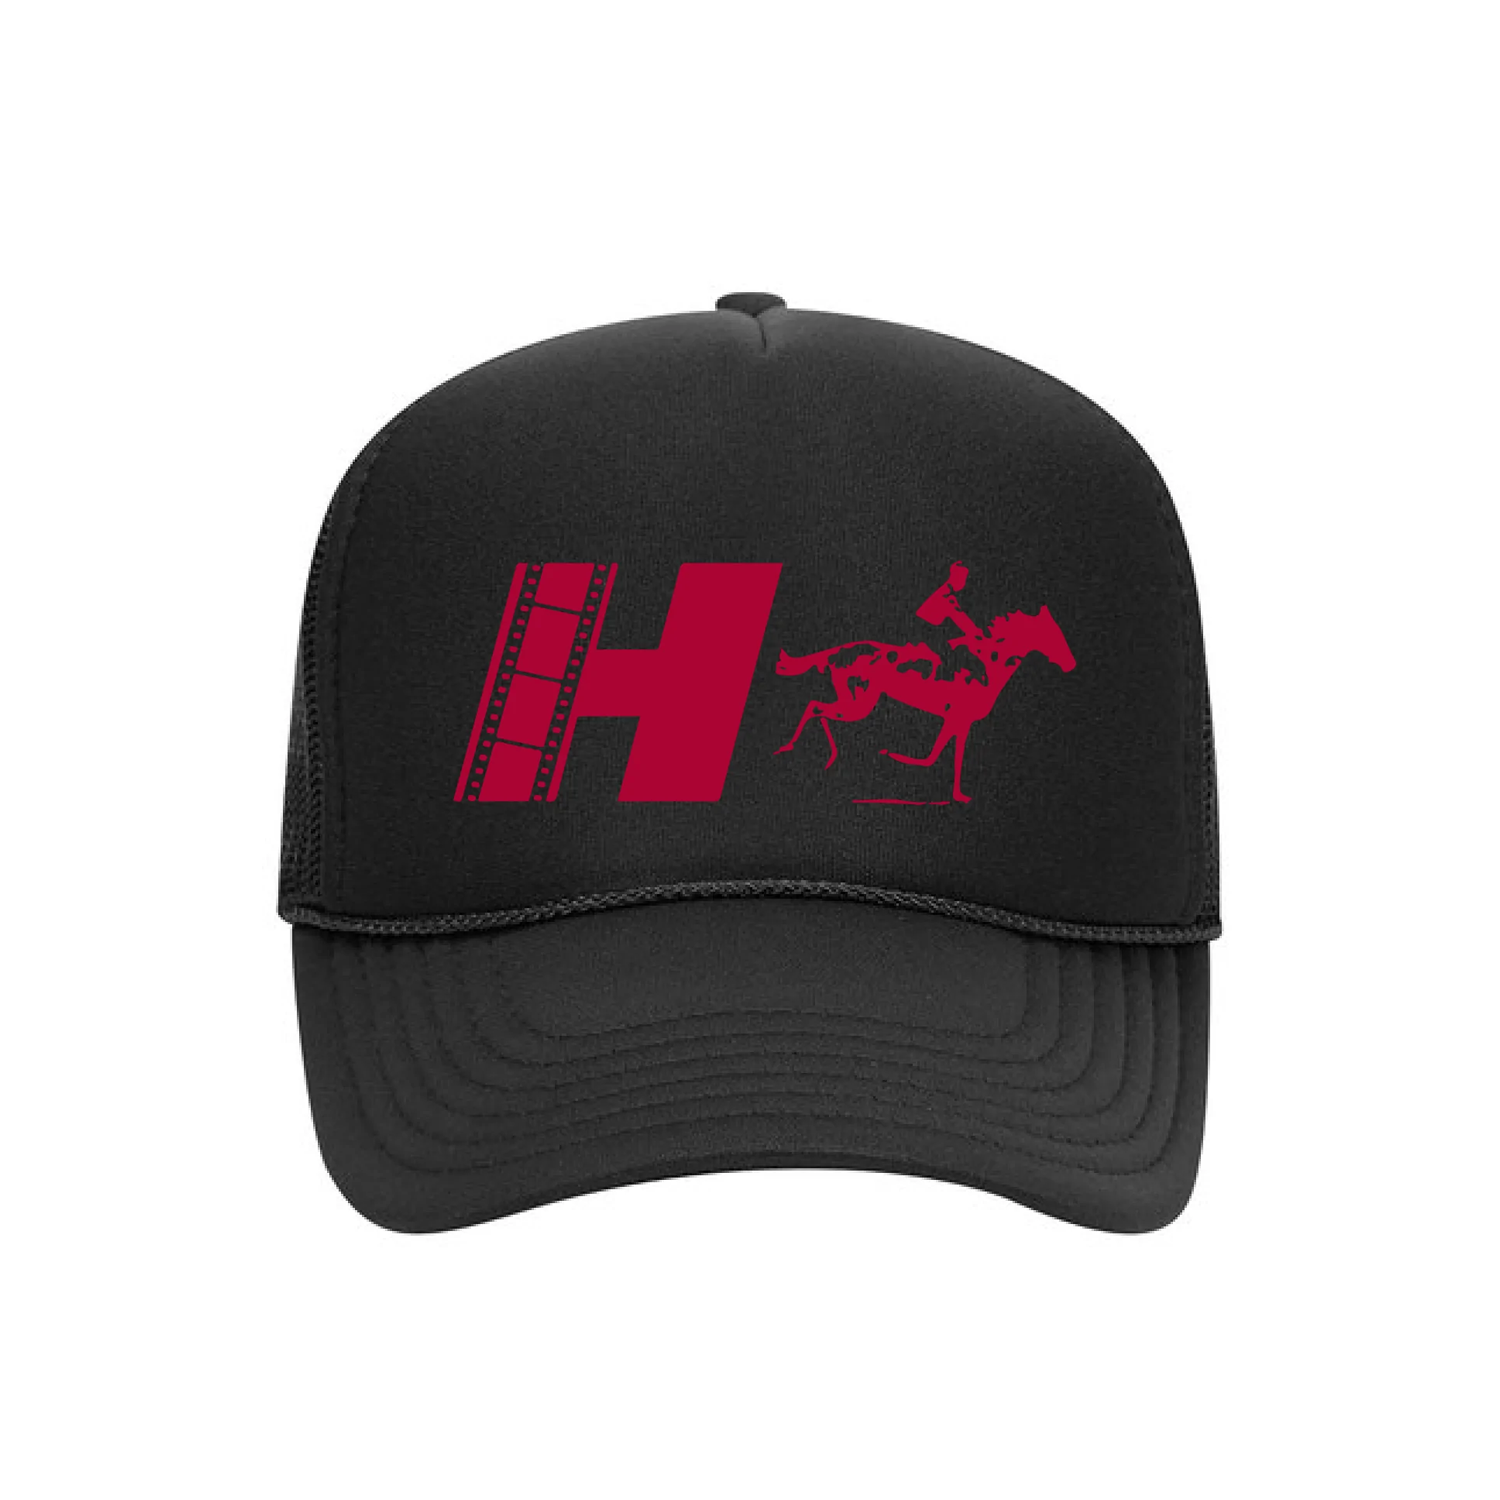 NOPE Haywood's Hollywood Horses Trucker Hat